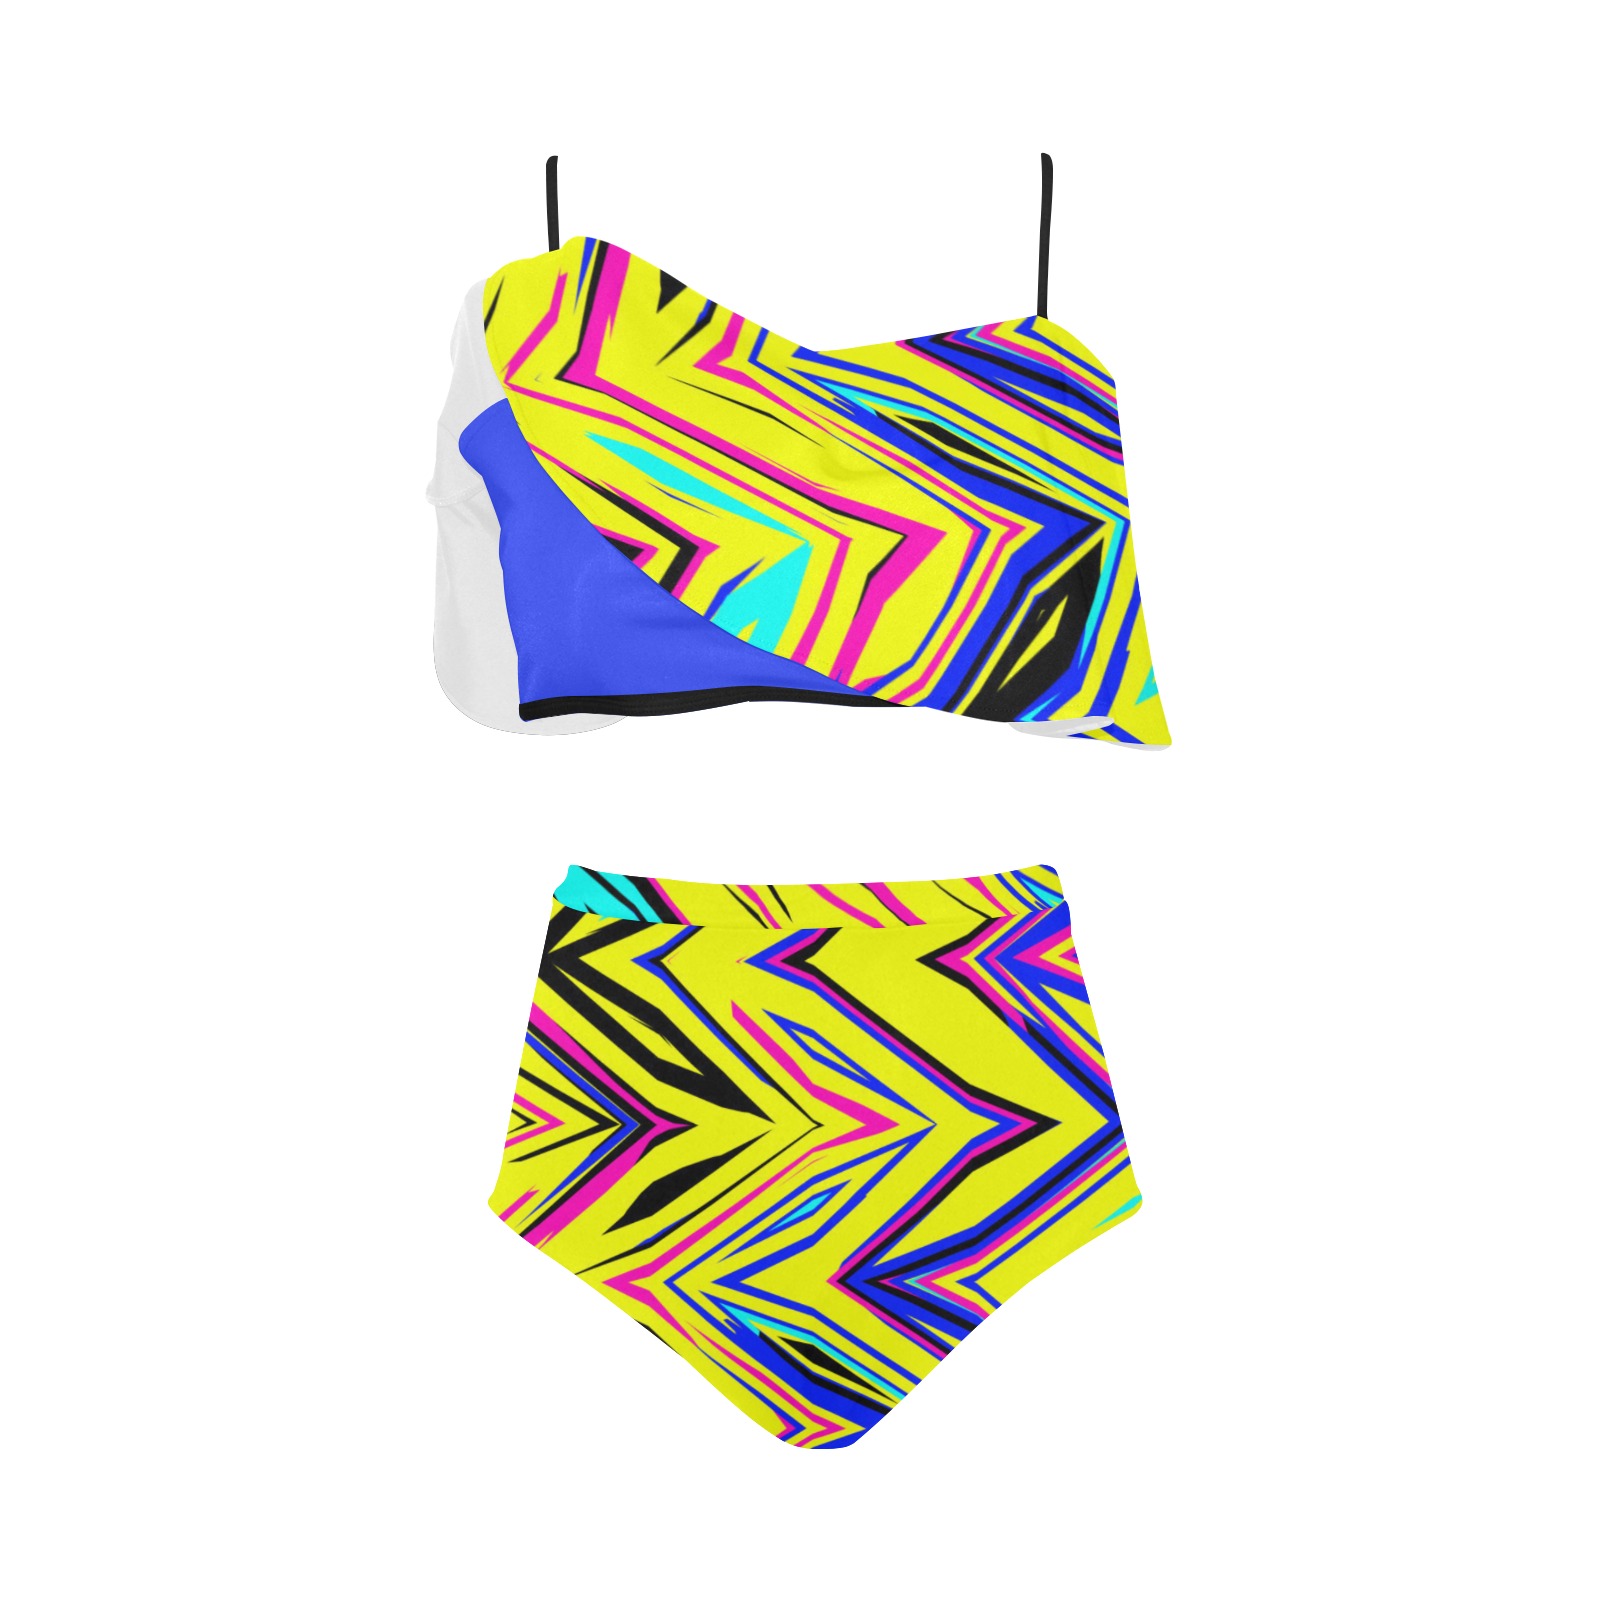 mycolorfulchevron High Waisted Ruffle Bikini Set (Model S13)